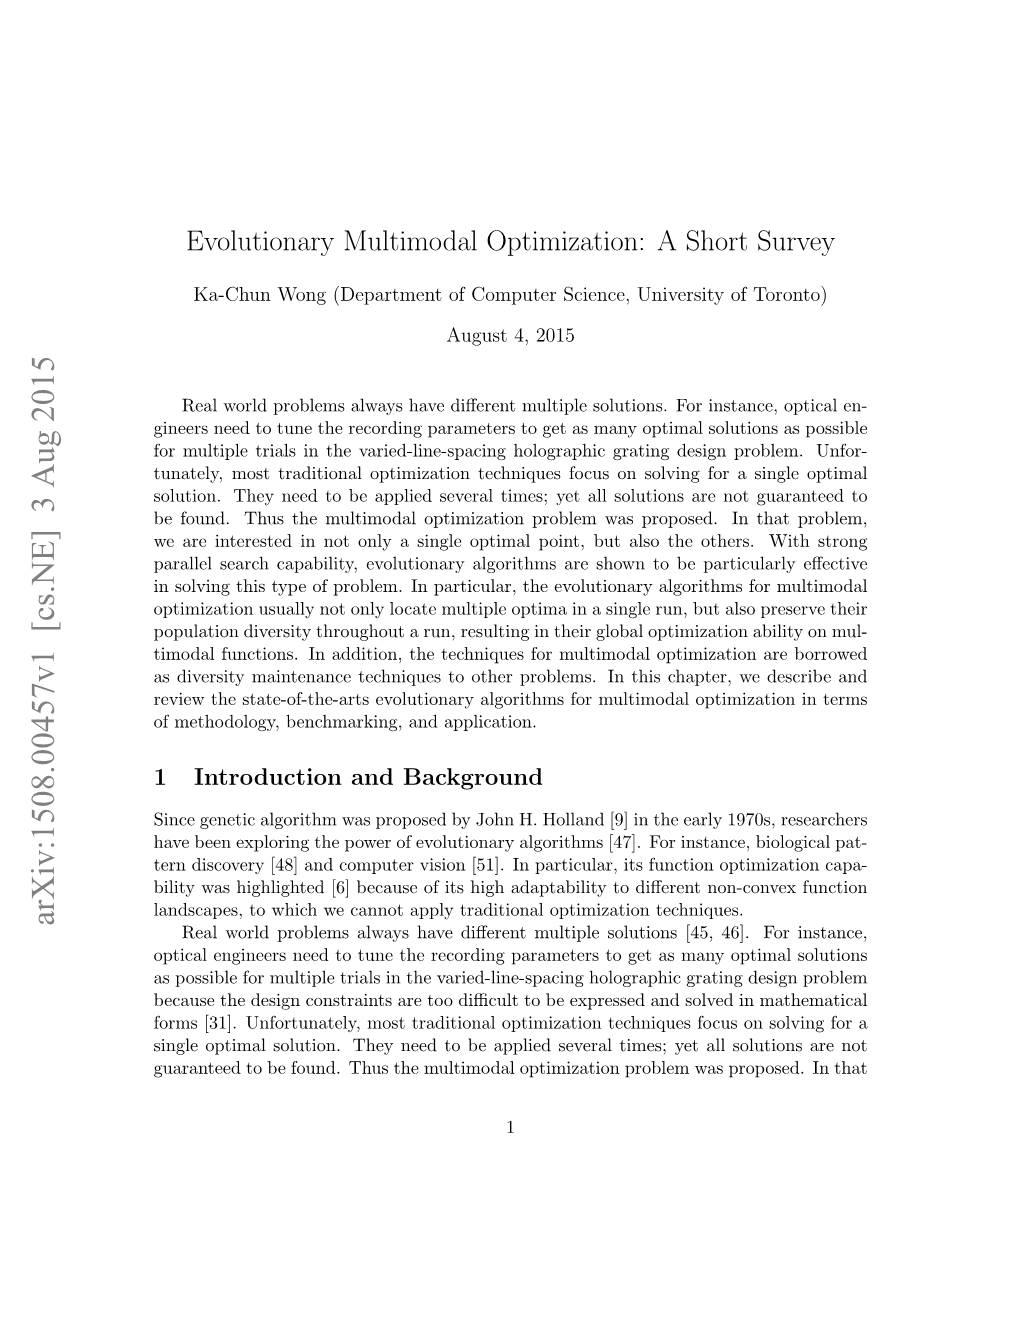 Evolutionary Multimodal Optimization: a Short Survey